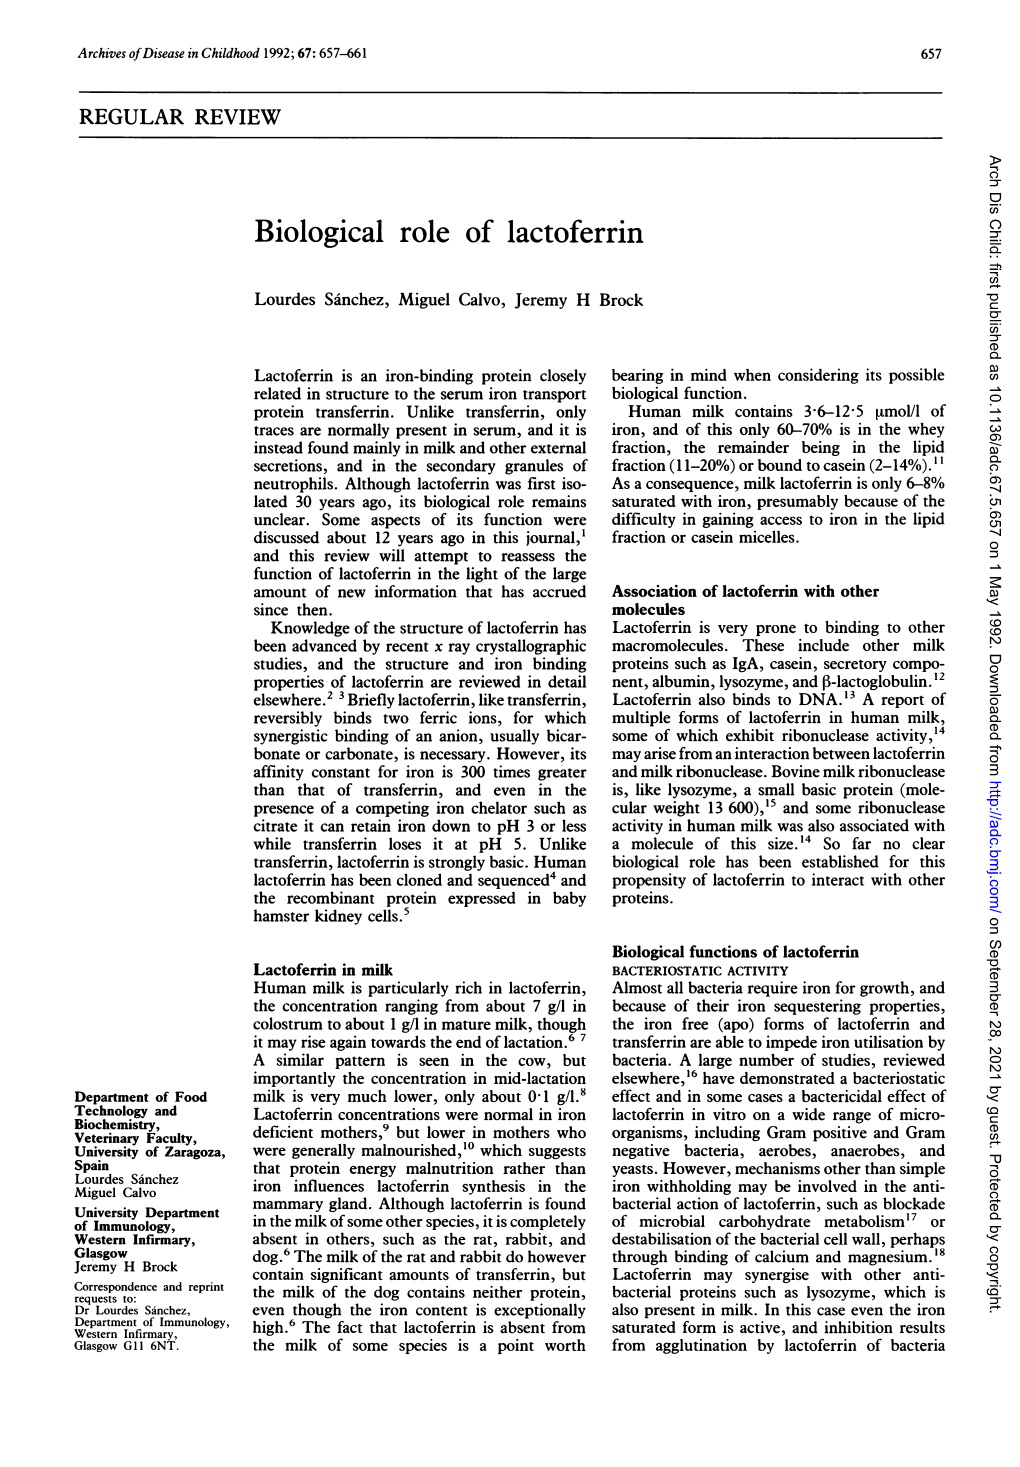 Biological Role of Lactoferrin